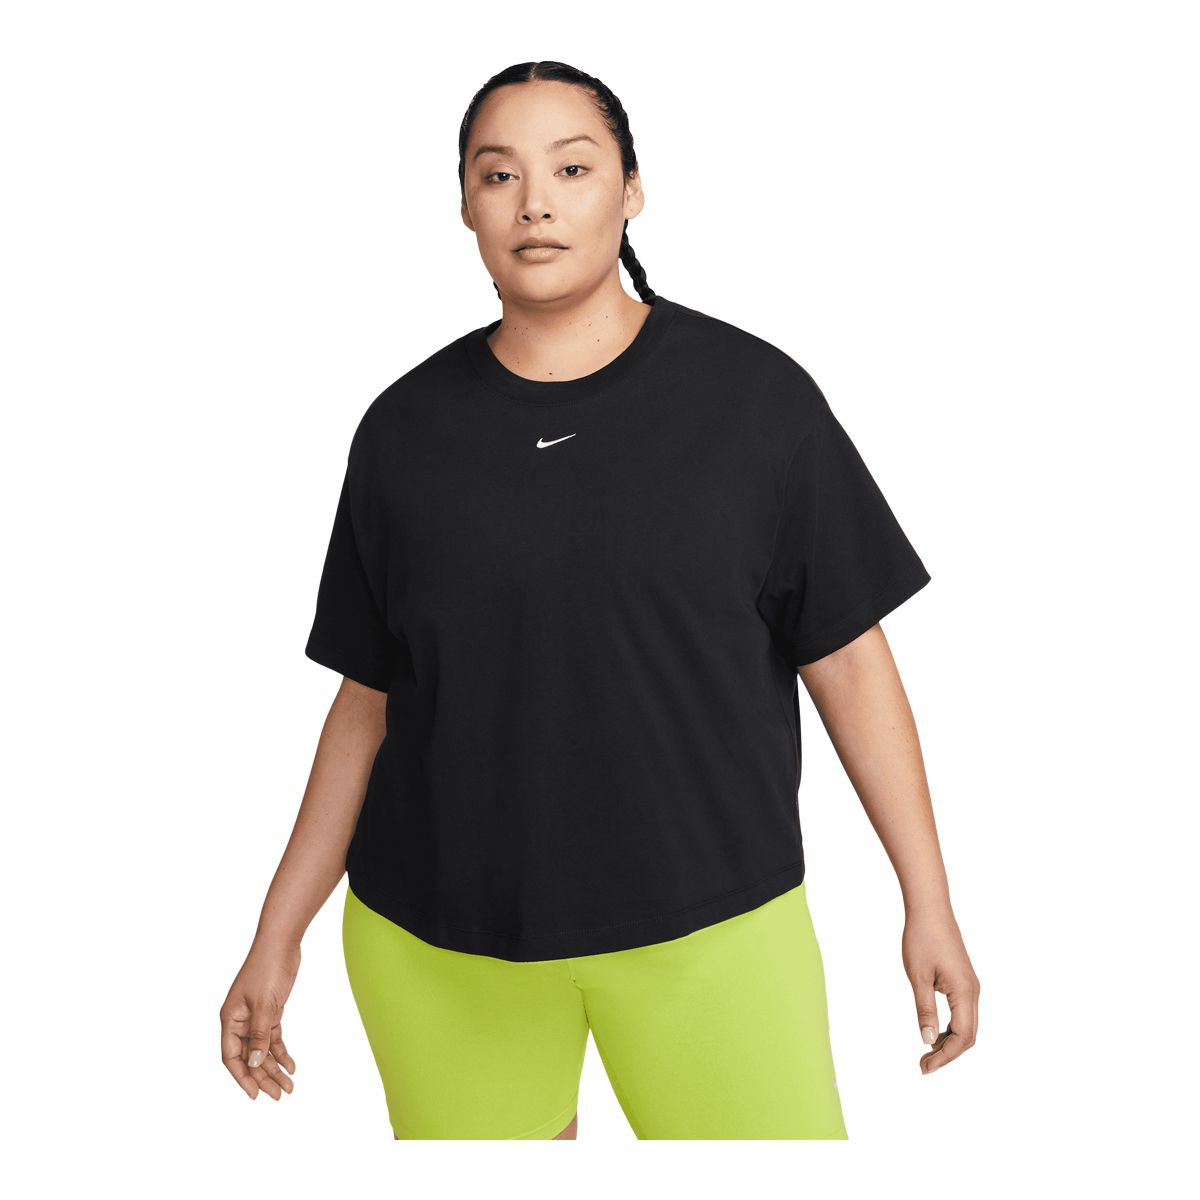 Nike Sportswear Essential Women's Boxy T-Shirt.